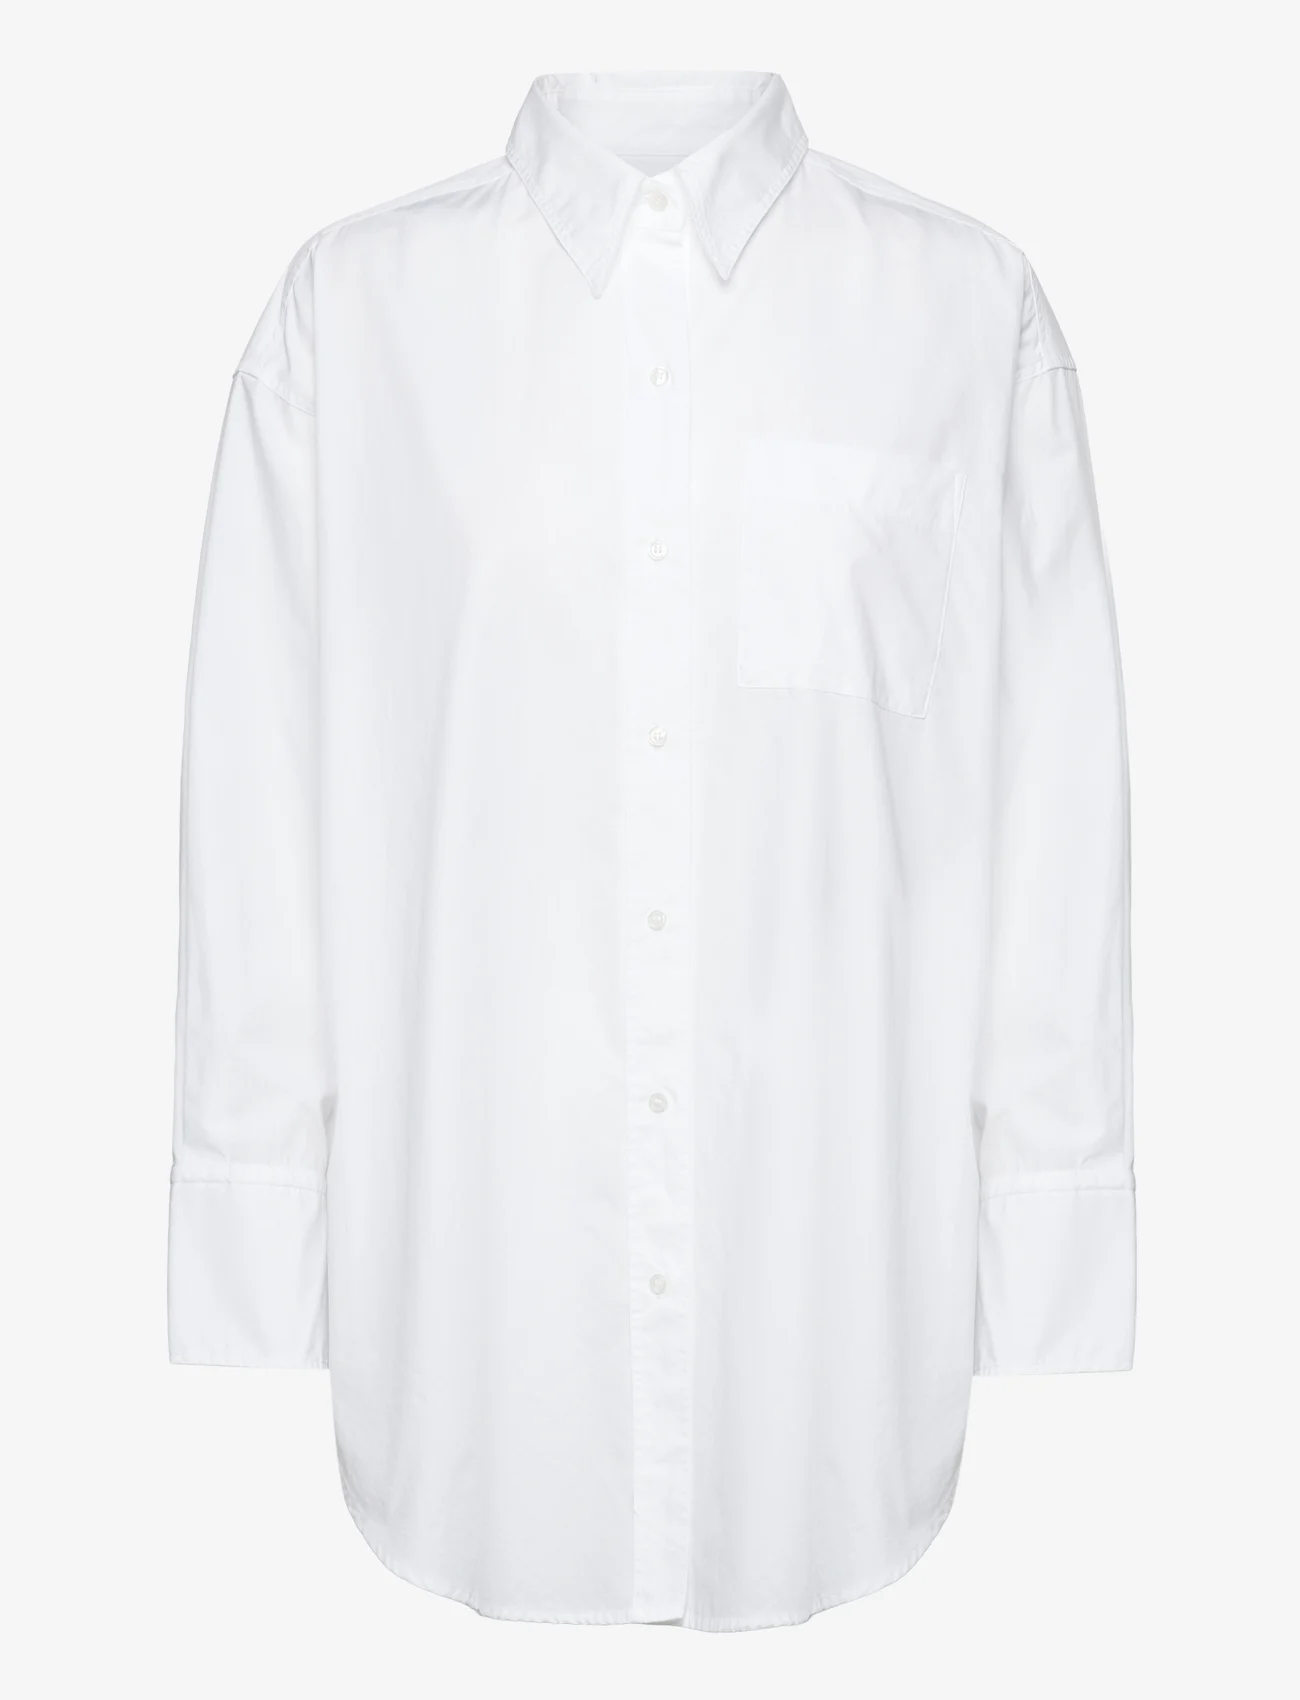 BOSS - C_Bostucci_1 - långärmade skjortor - white - 0